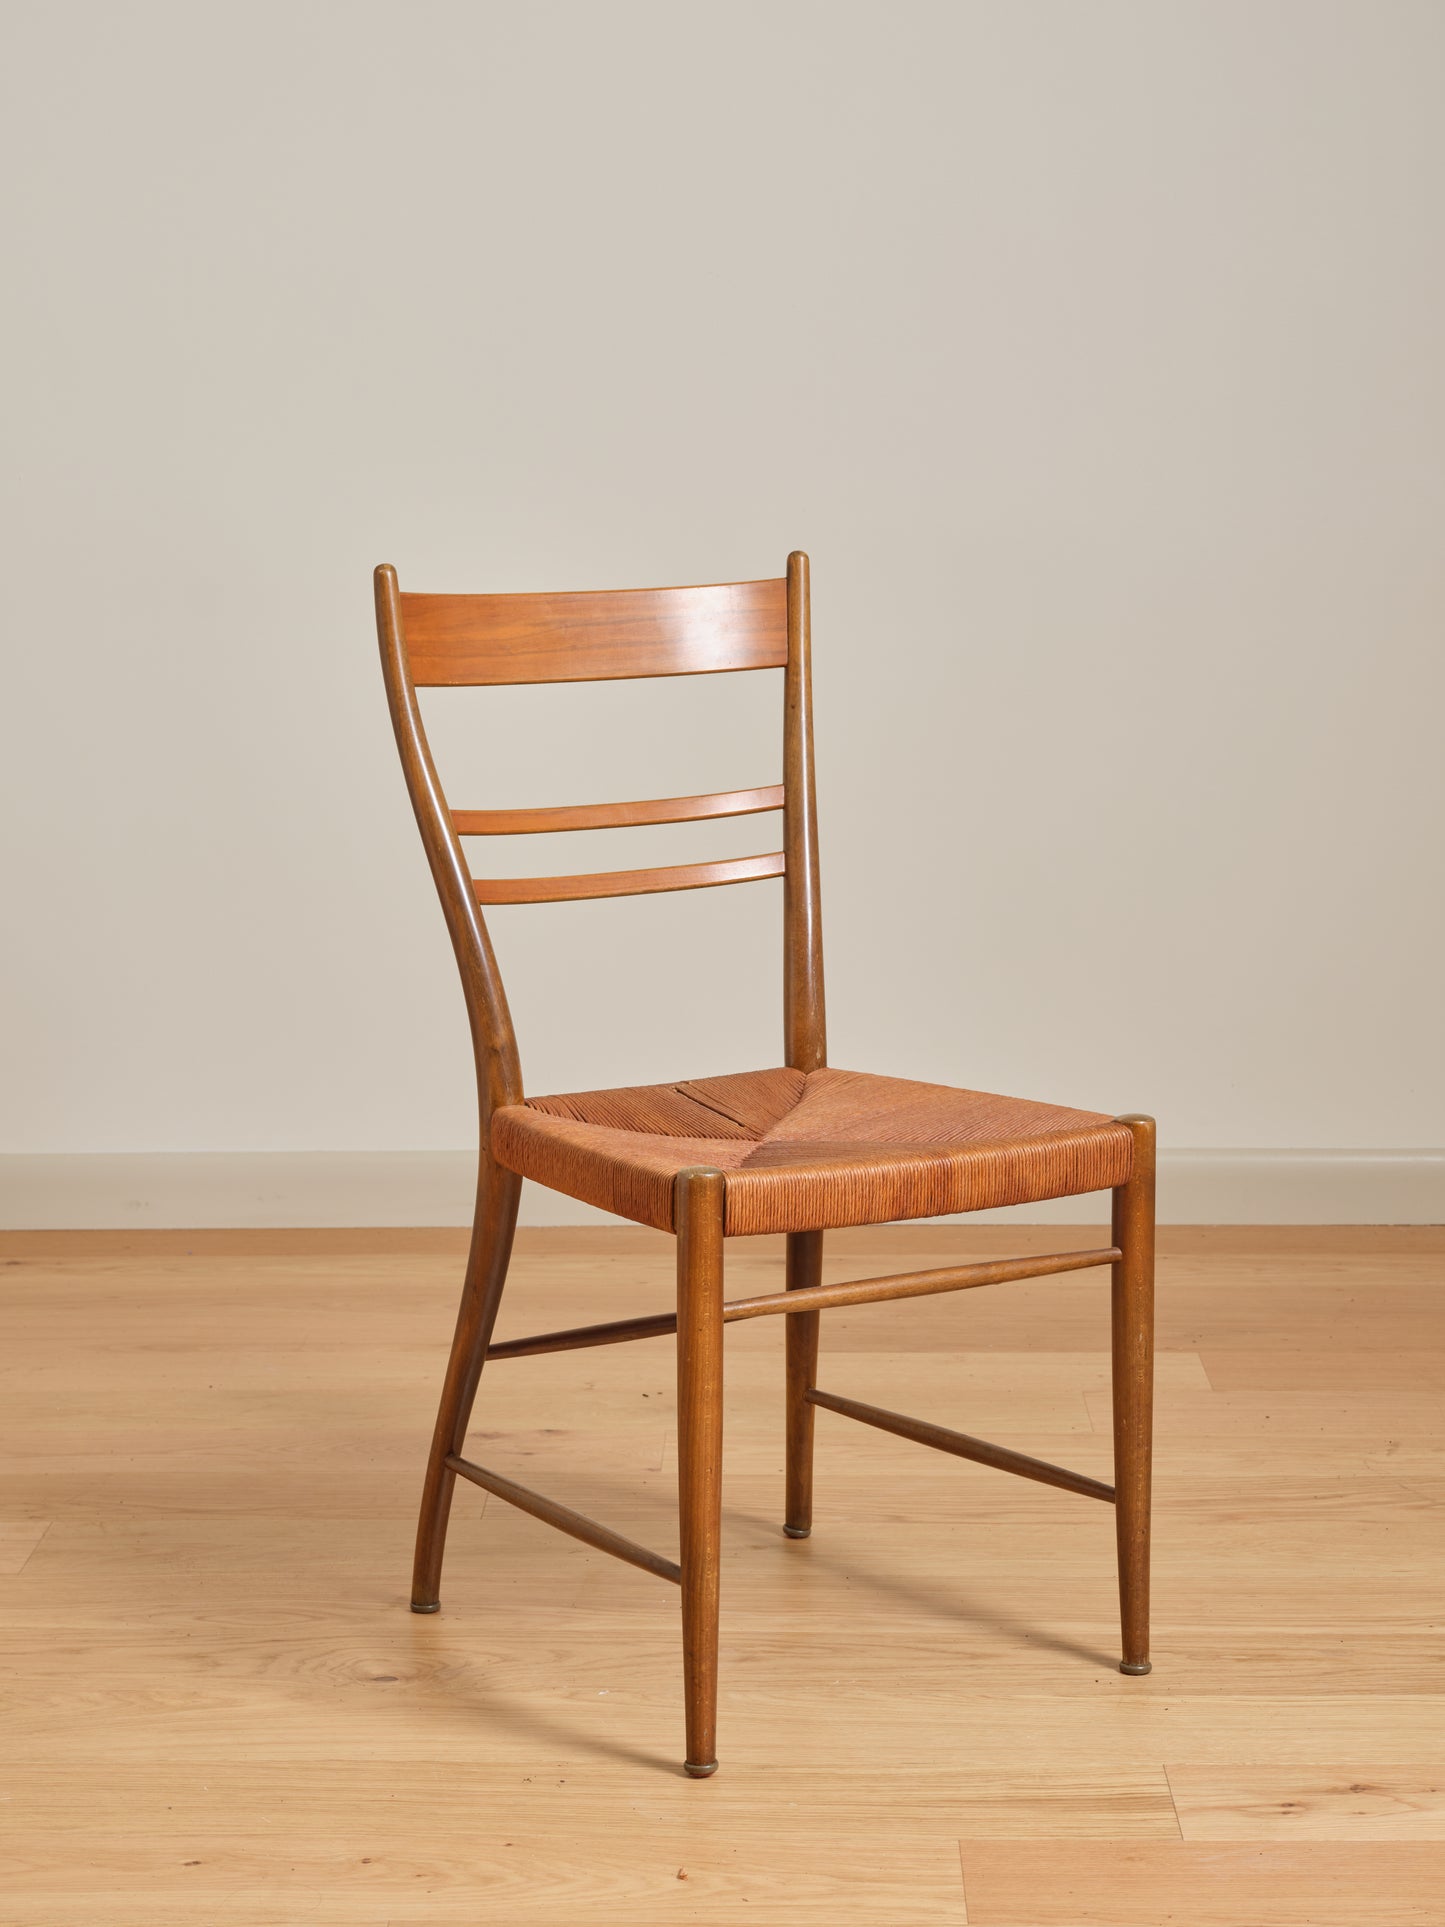 Set of 4 Danish Dining Chairs